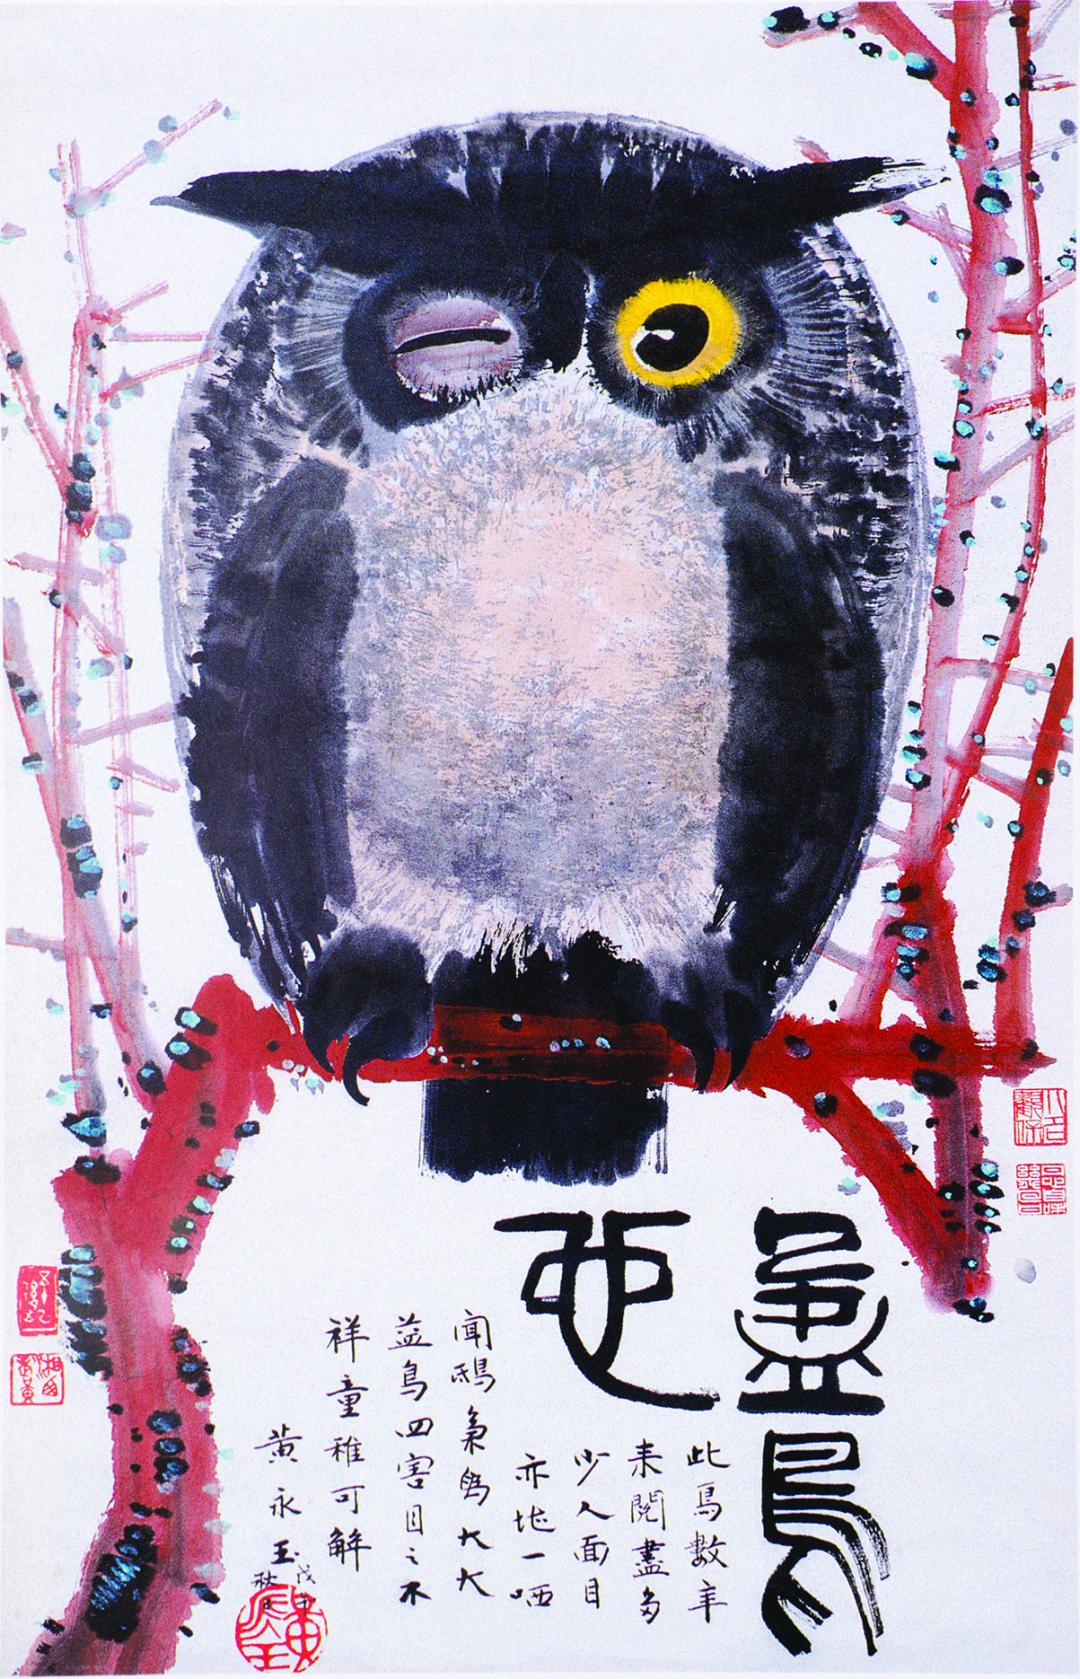 Huang Yongyu, Winking Owl, 1978